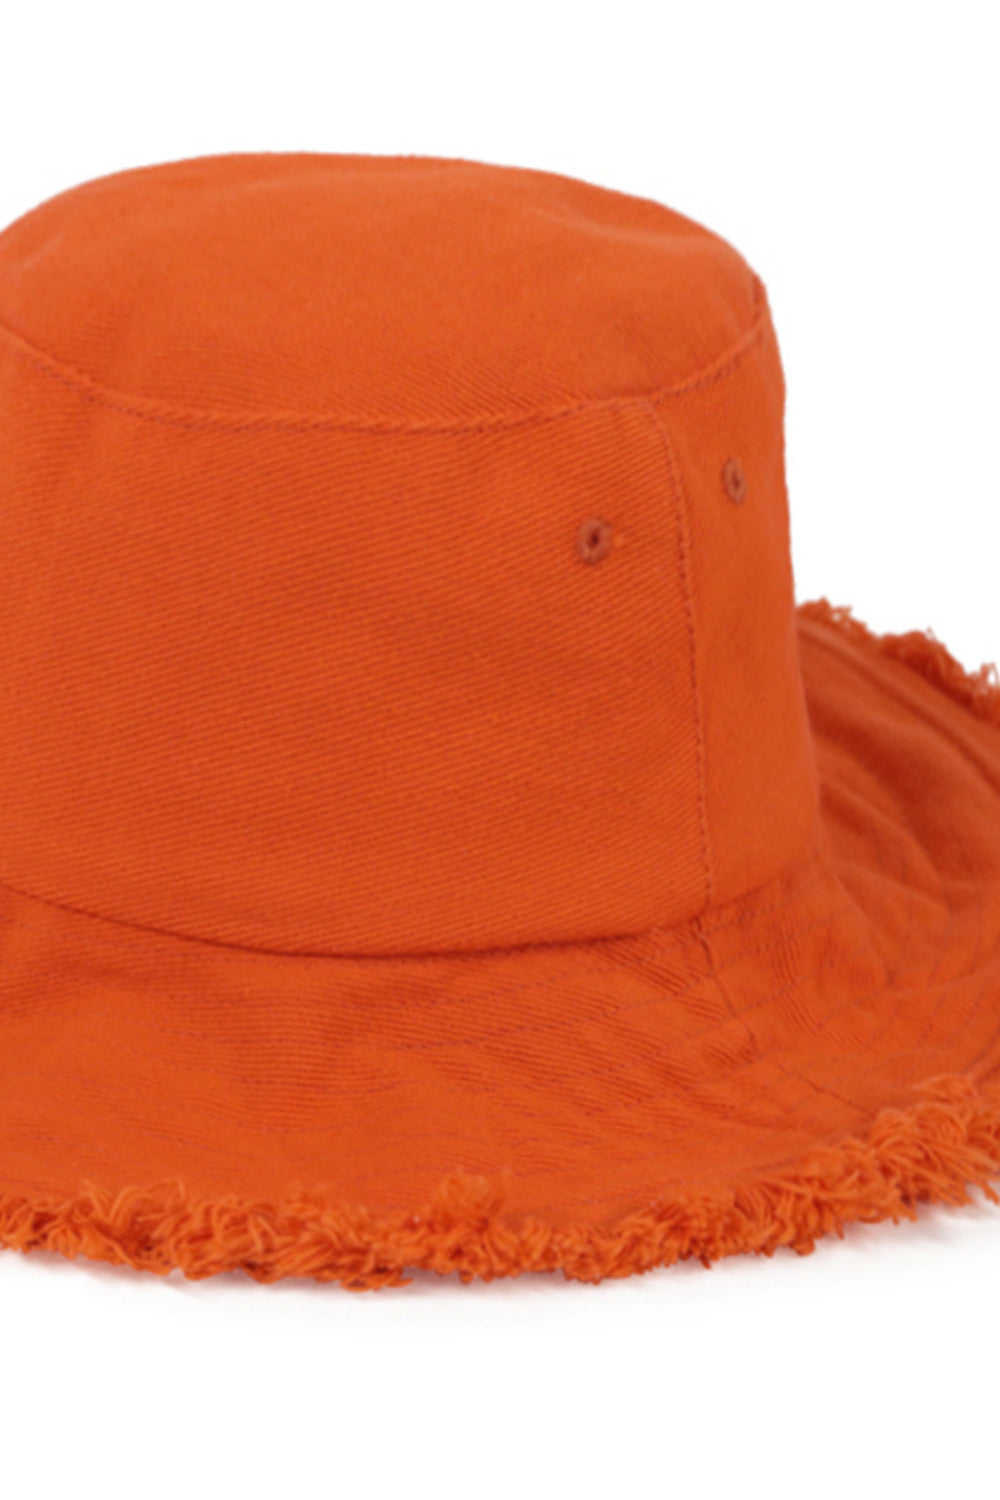 My Accessories London Frayed Edge Bucket Hat in Orange | Beach | Holiday | Summer | Distressed | Frayed | Bright | Festival Hat | Ladies Hat| Women's Accessories